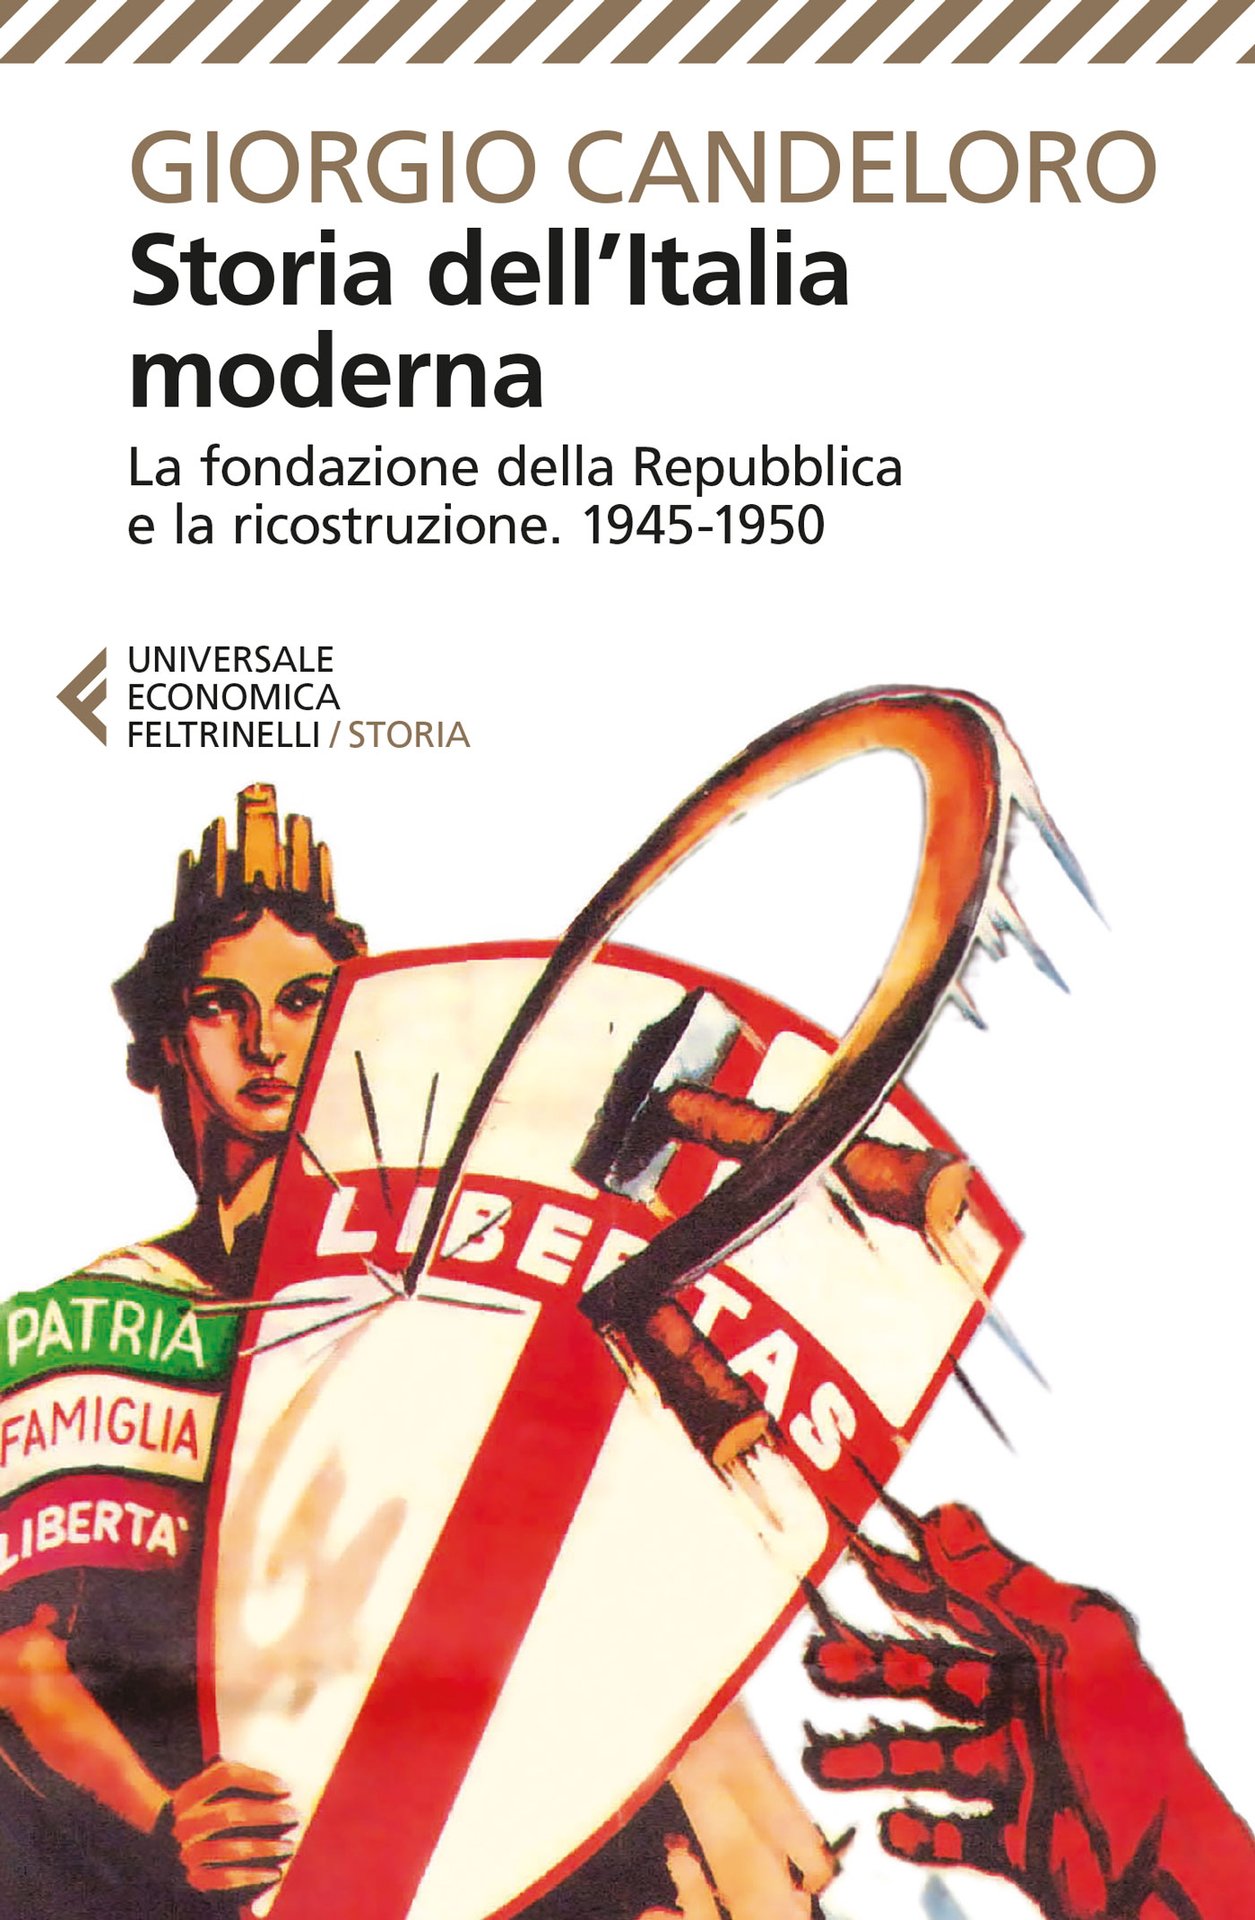 Storia dell'Italia moderna